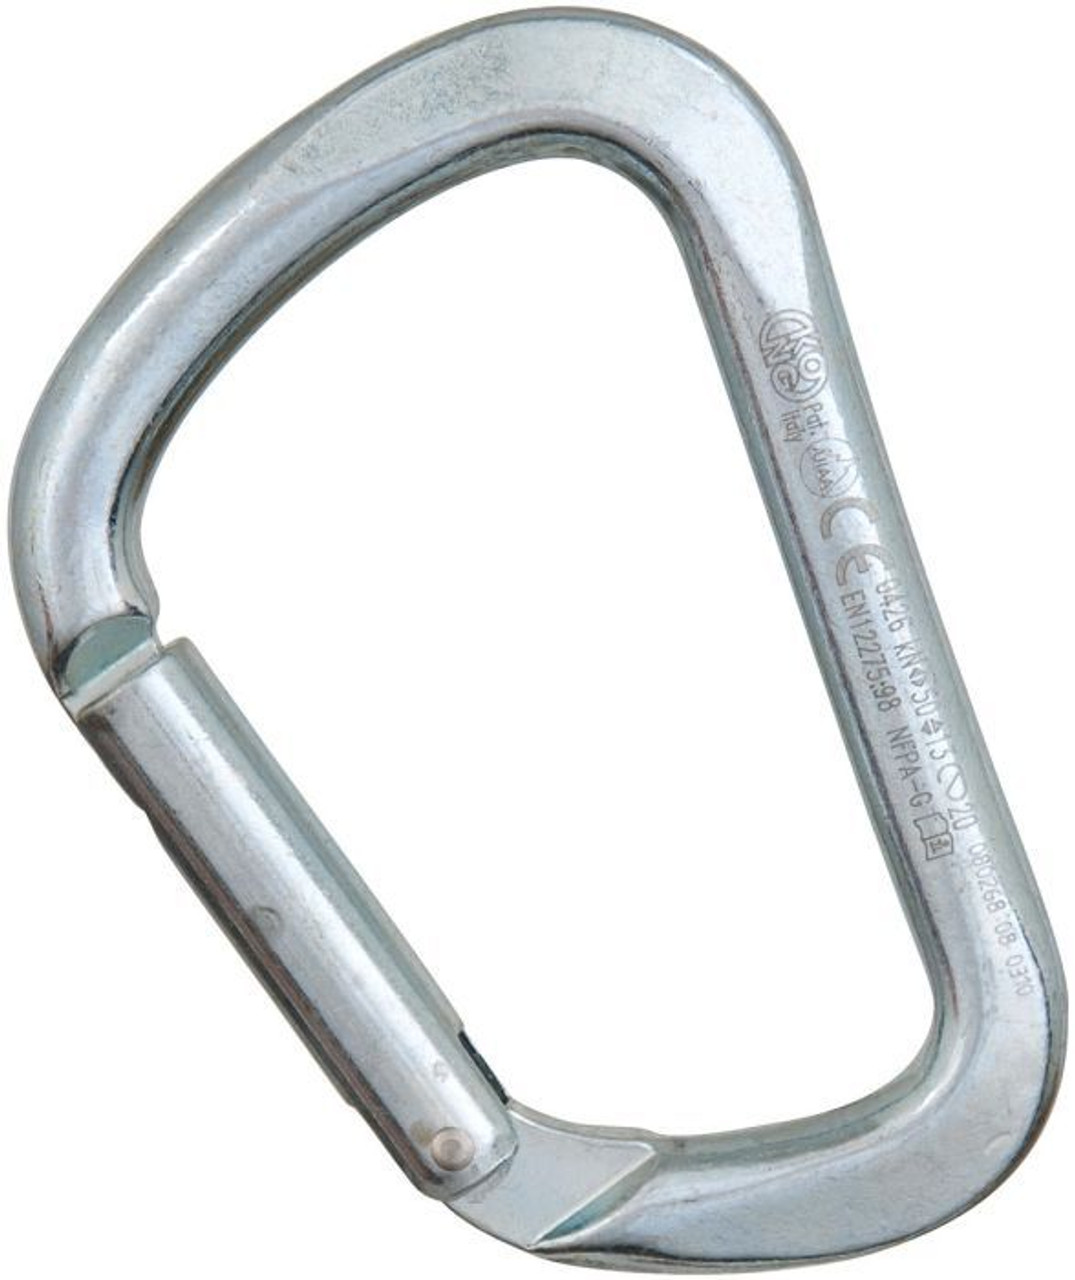 PlumGrove Inc Large Carabiner Key Ring